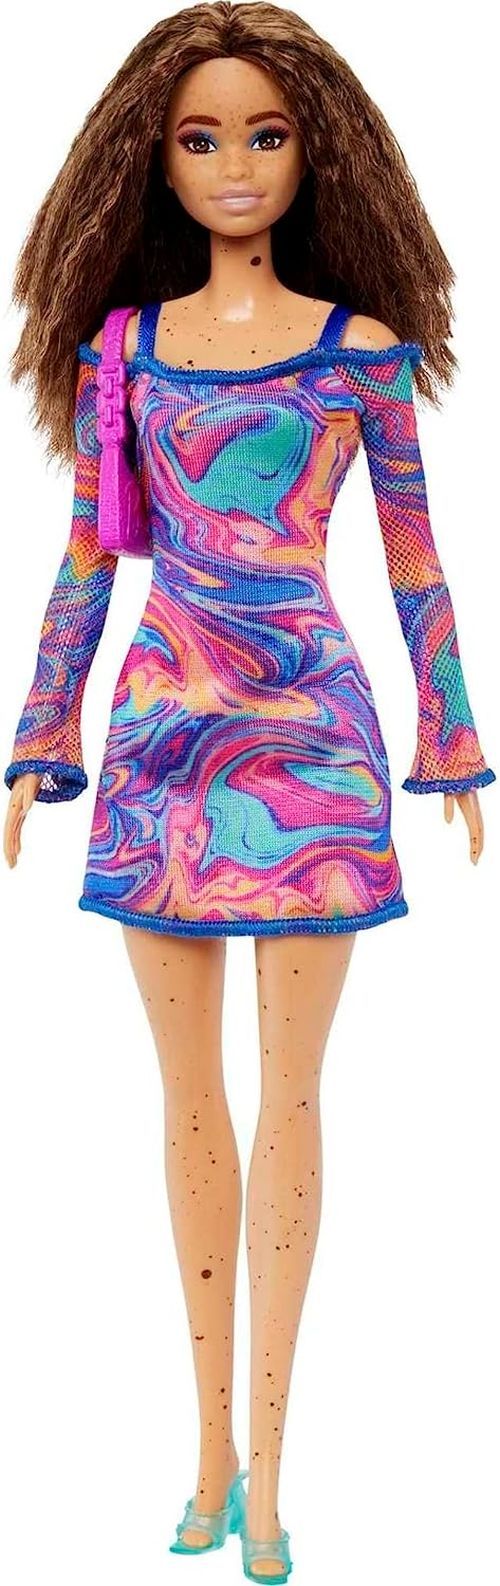 MATTEL Barbie In Swirled Color Dress - BARBIE DOLLS